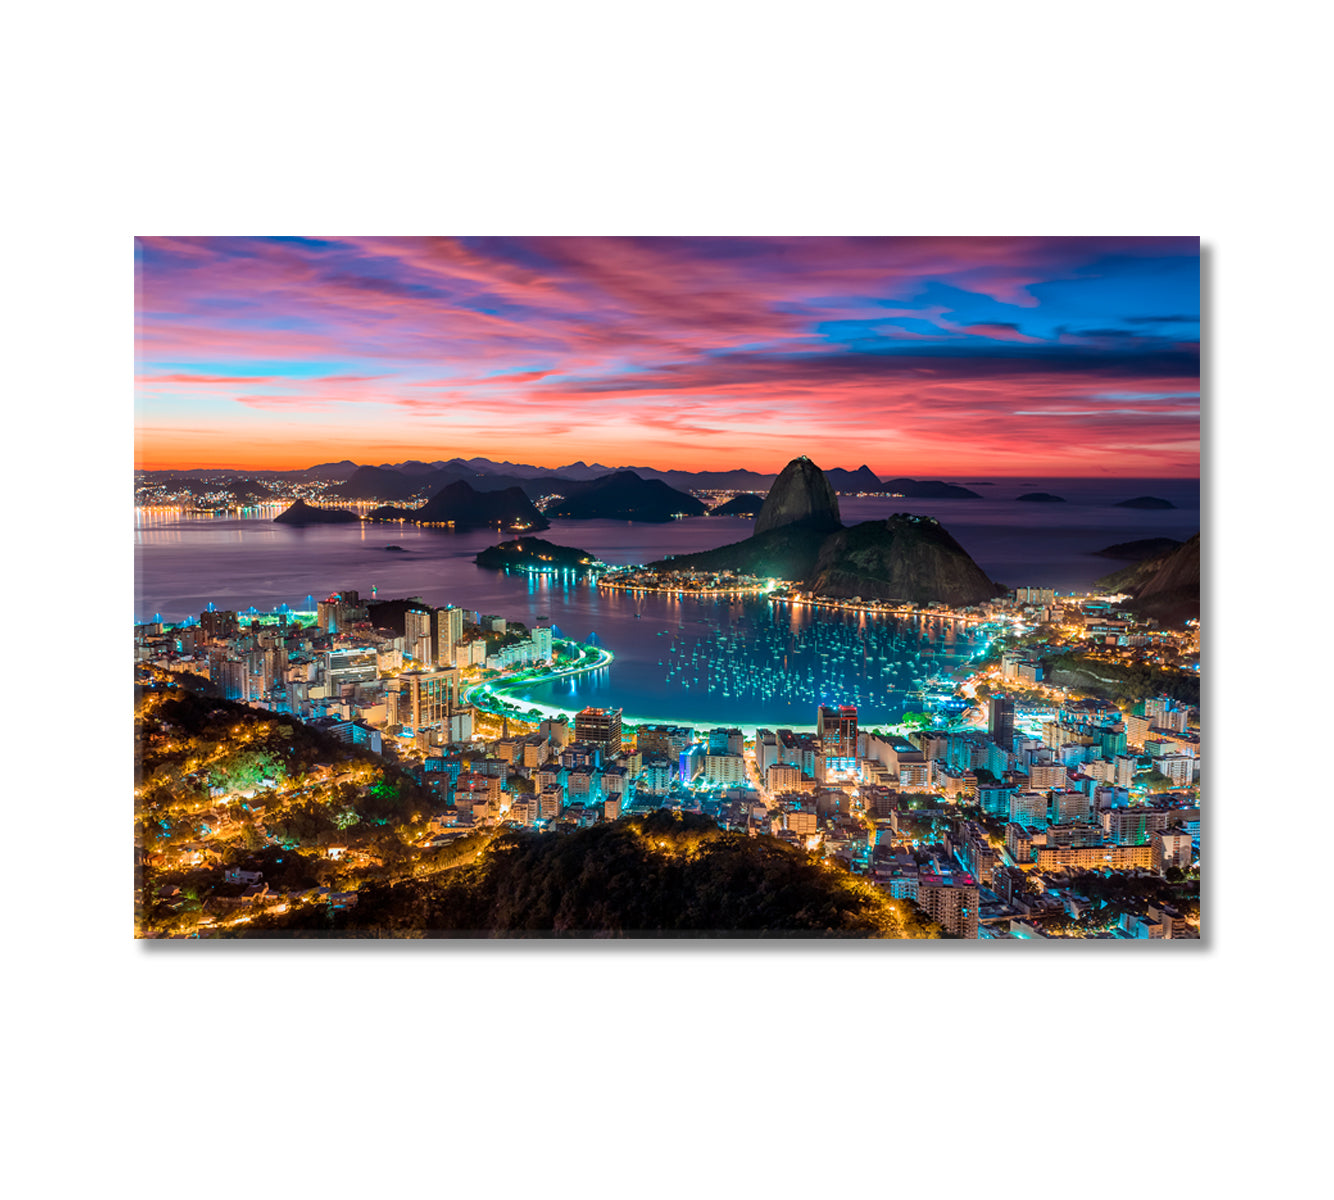 Sunset in Rio de Janeiro Brazil Canvas Print-Canvas Print-CetArt-1 Panel-24x16 inches-CetArt